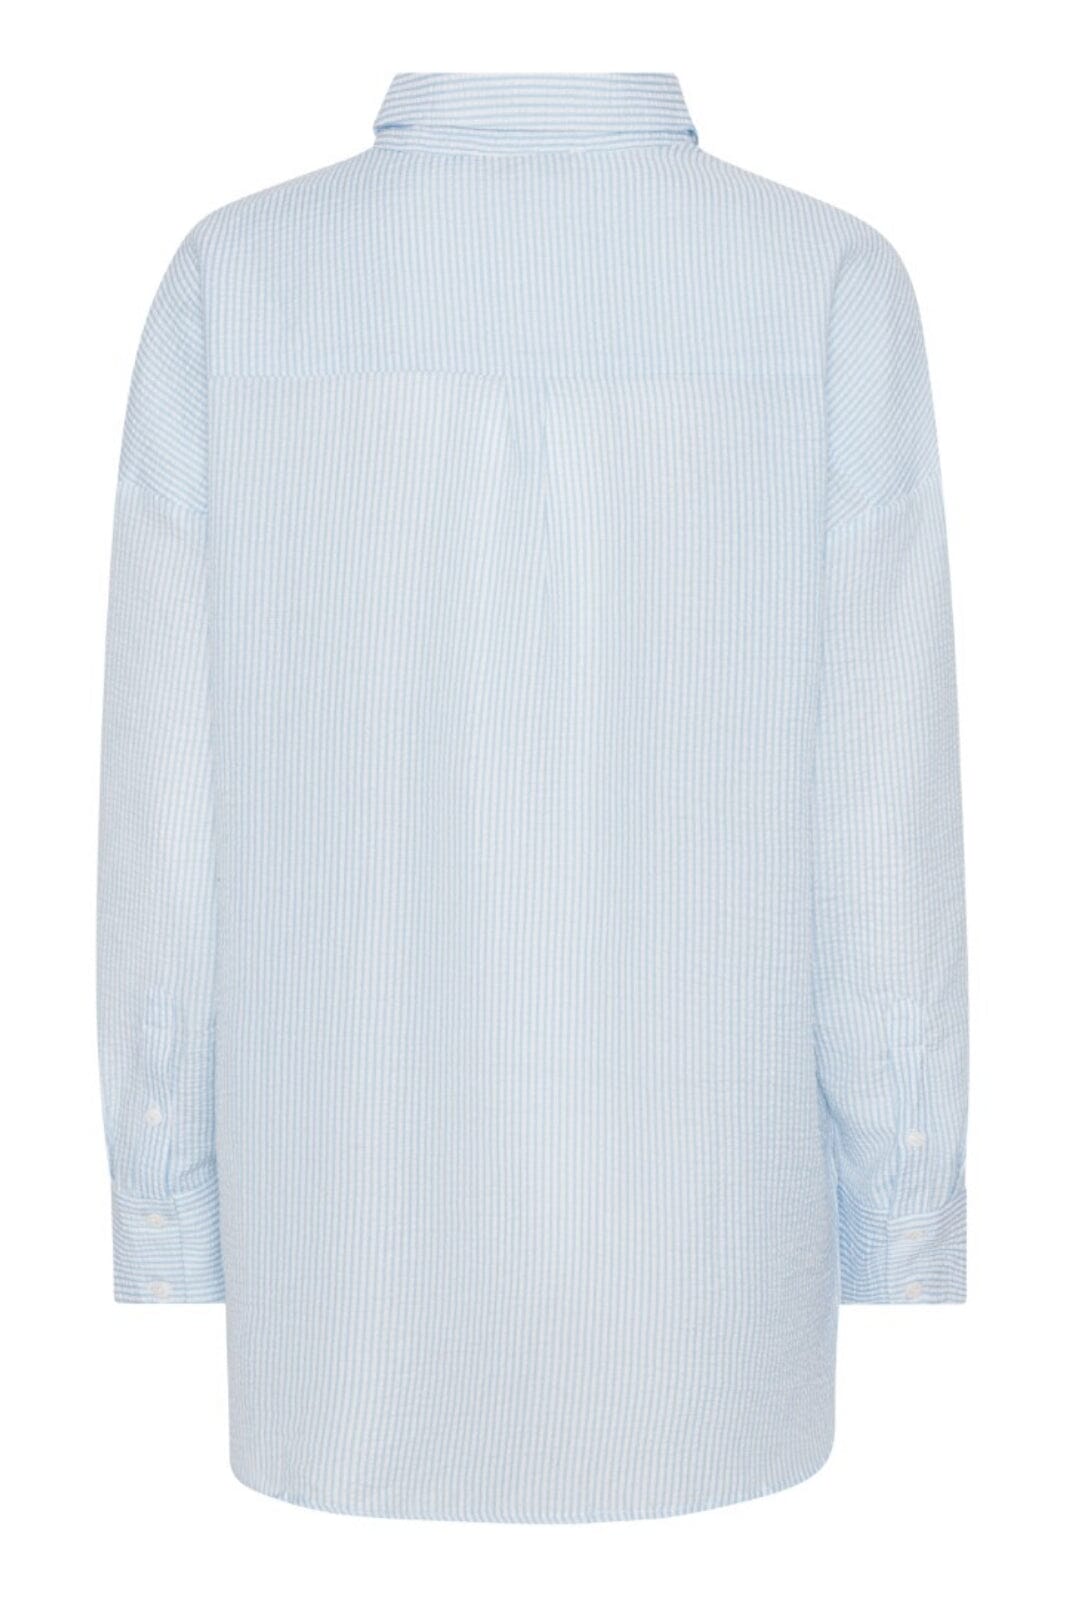 A-View - Sonja Shirt - 112 Blue/White Stribe Skjorter 